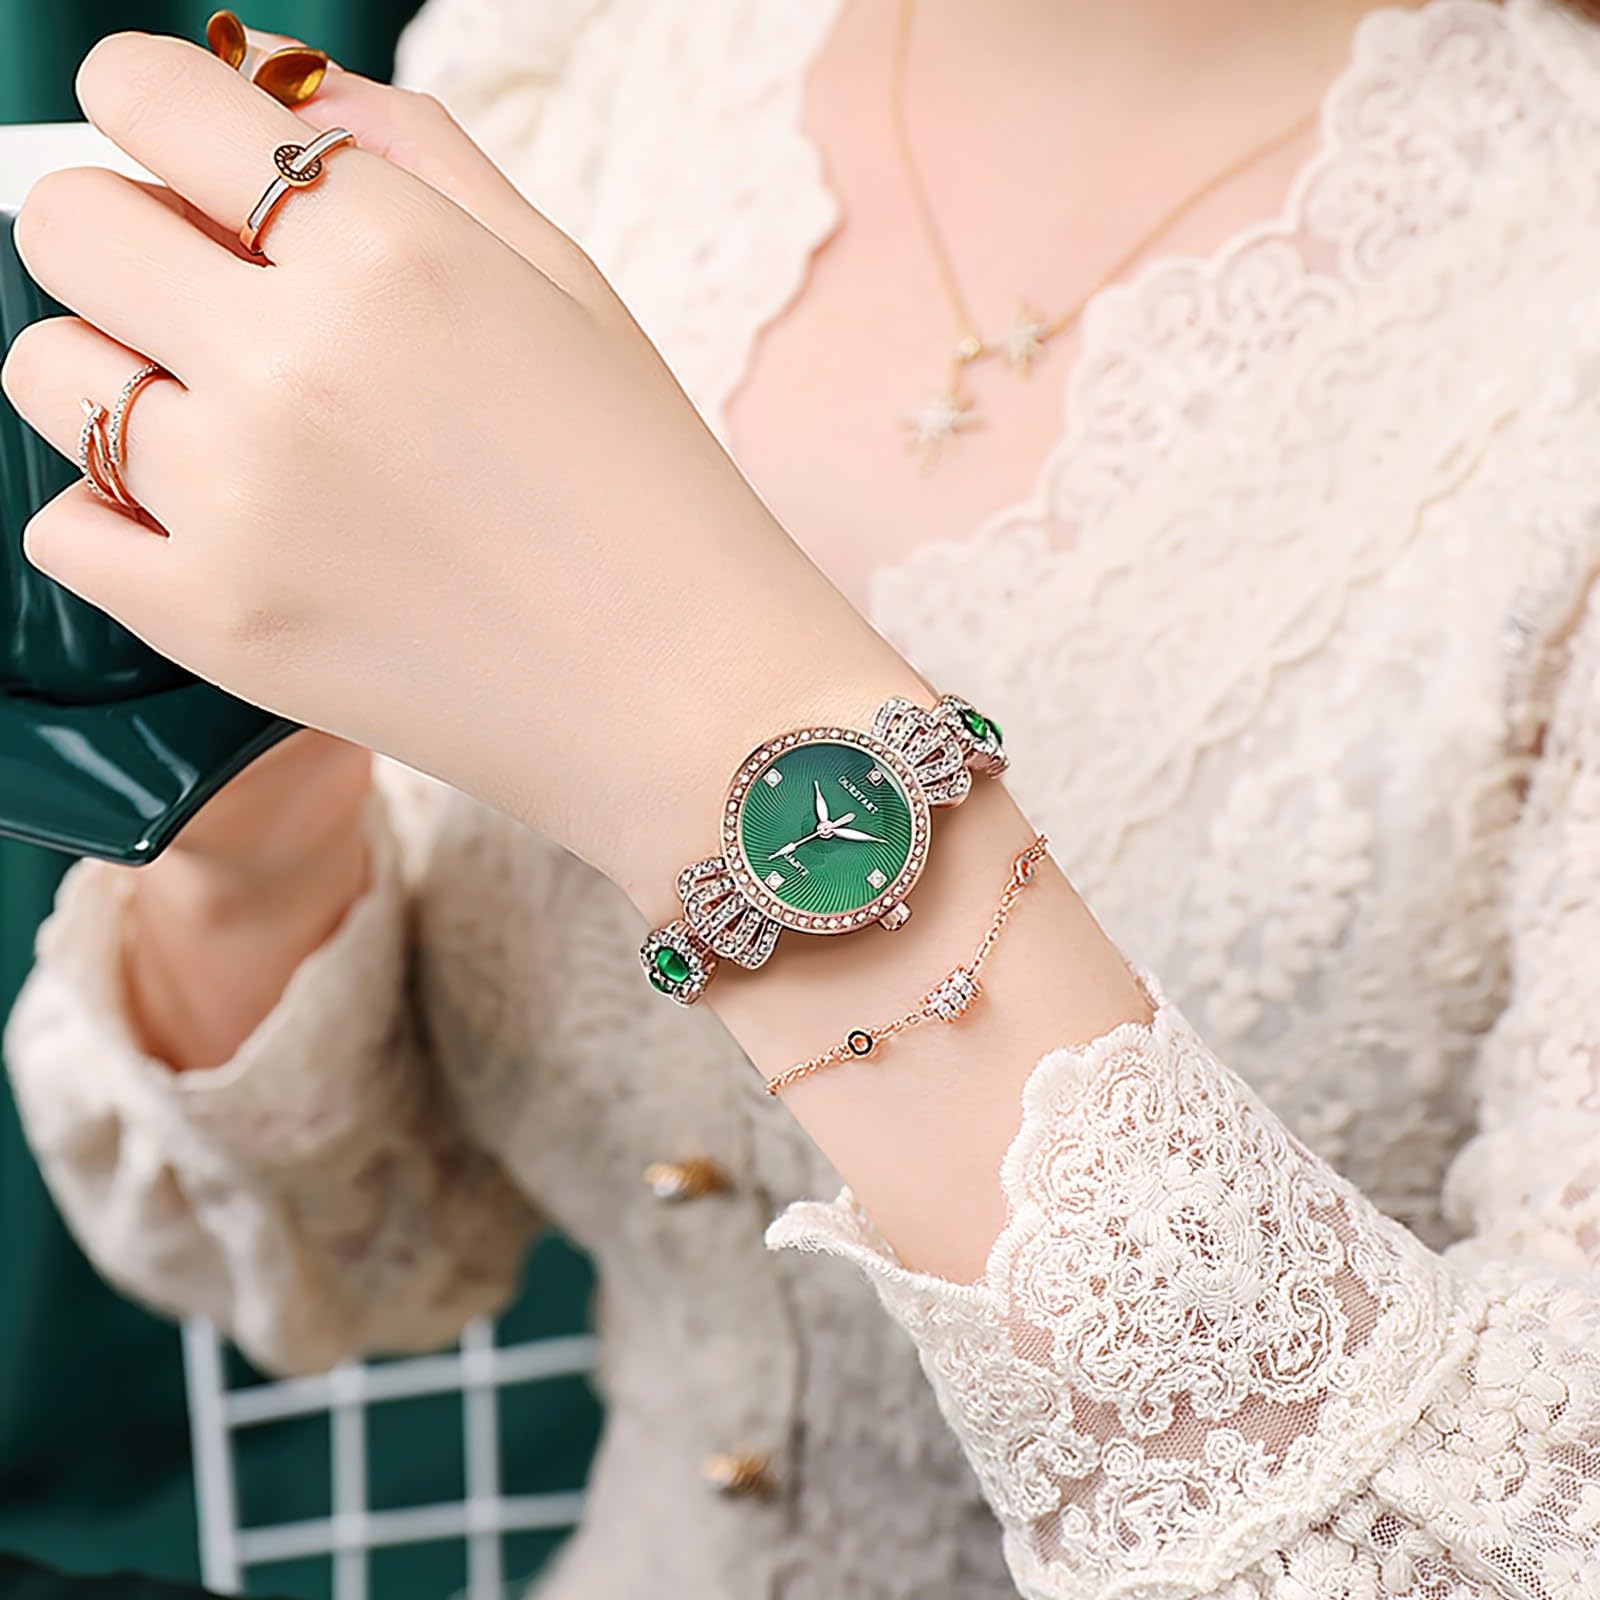 TPSOUM Wrist Watch for Women, Bracelet Designed Lady's Watch, Quartz Analog Women's Watch